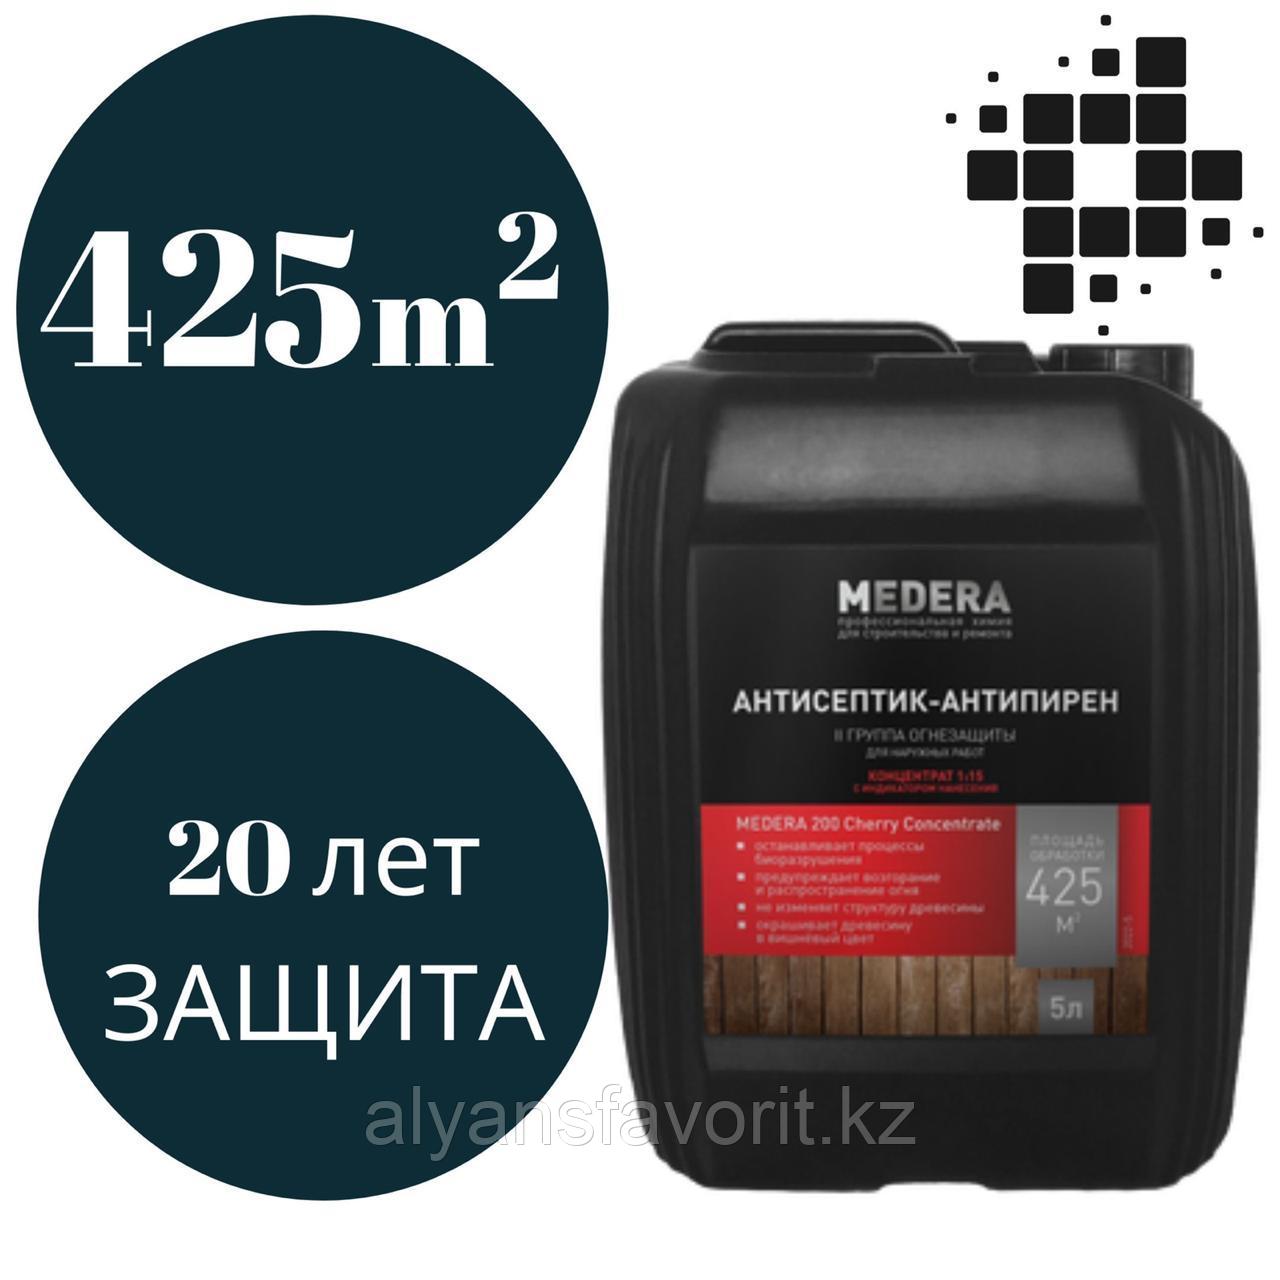 MEDERA 200 - Cherry- пропитка огнебиозащита для древесины II гр. 5 литров.